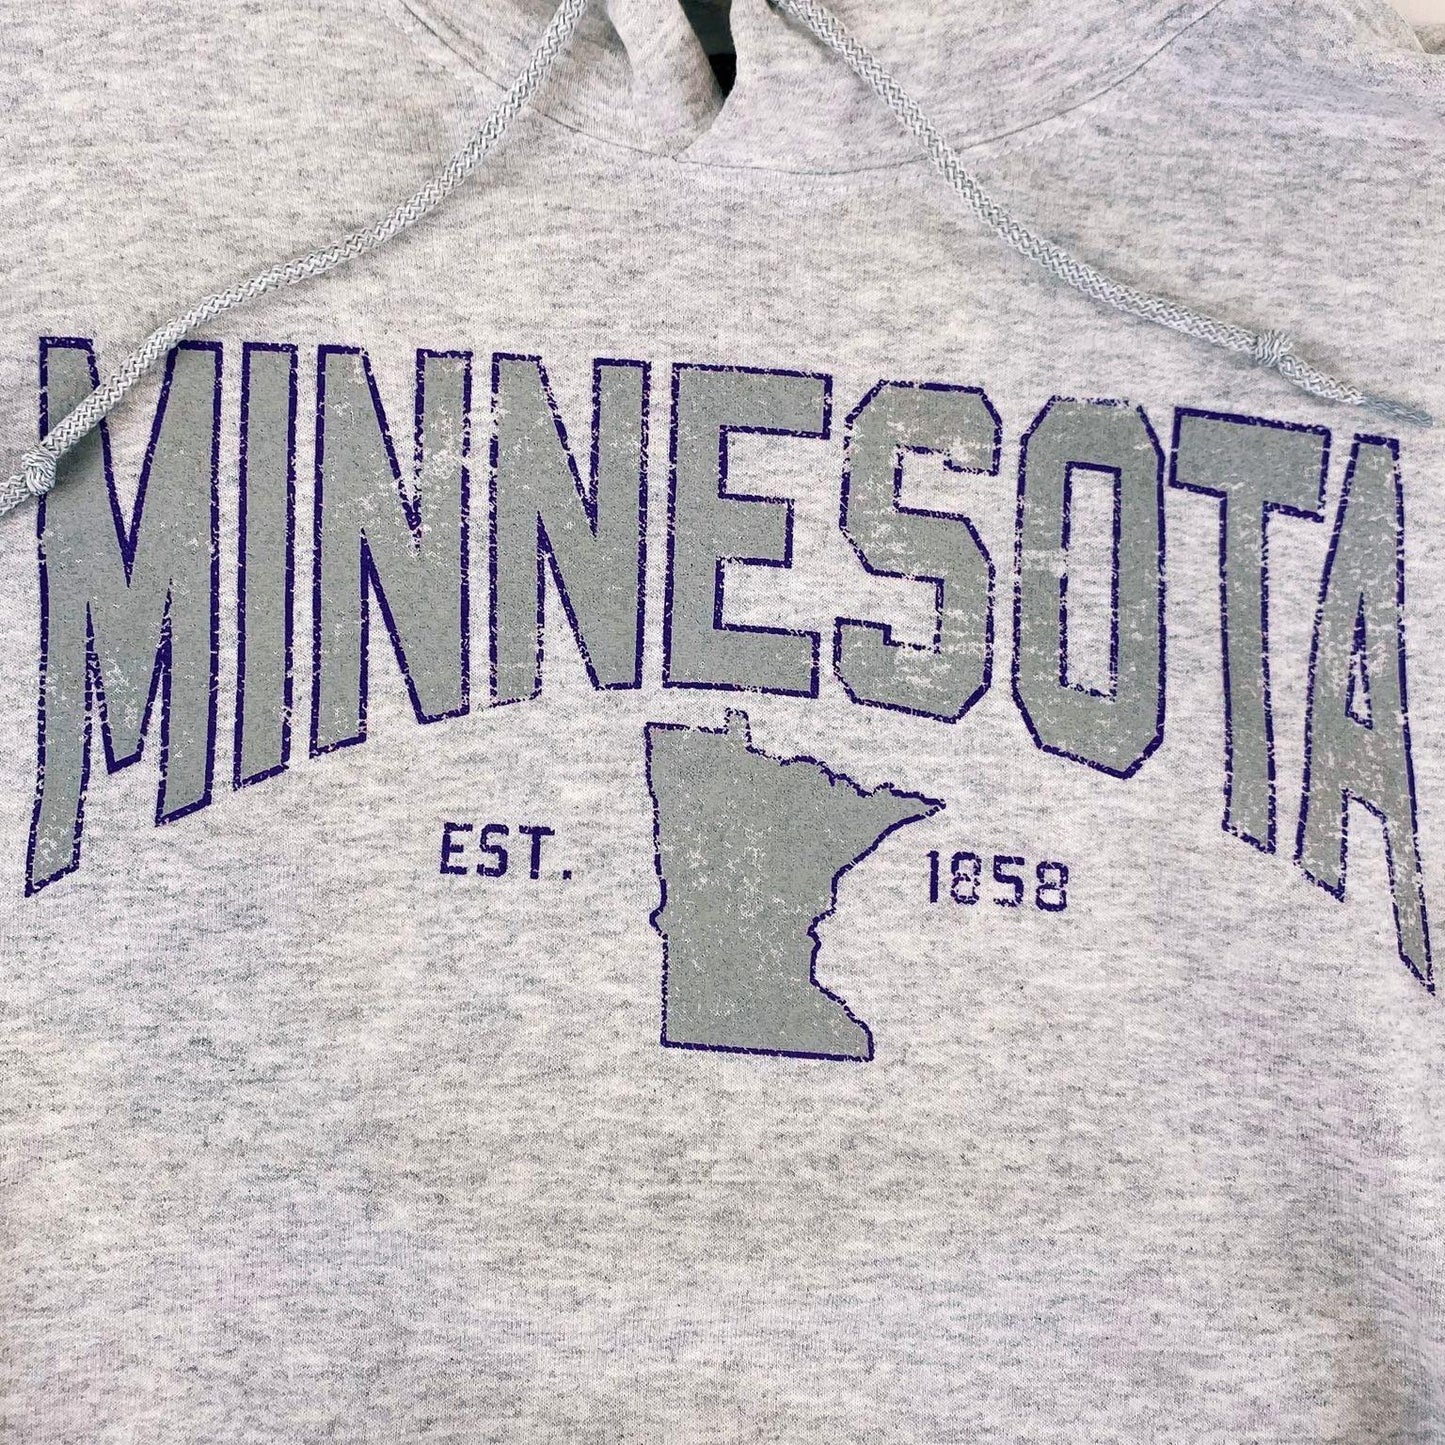 Minnesota Arch Sweatshirt - Love From USA